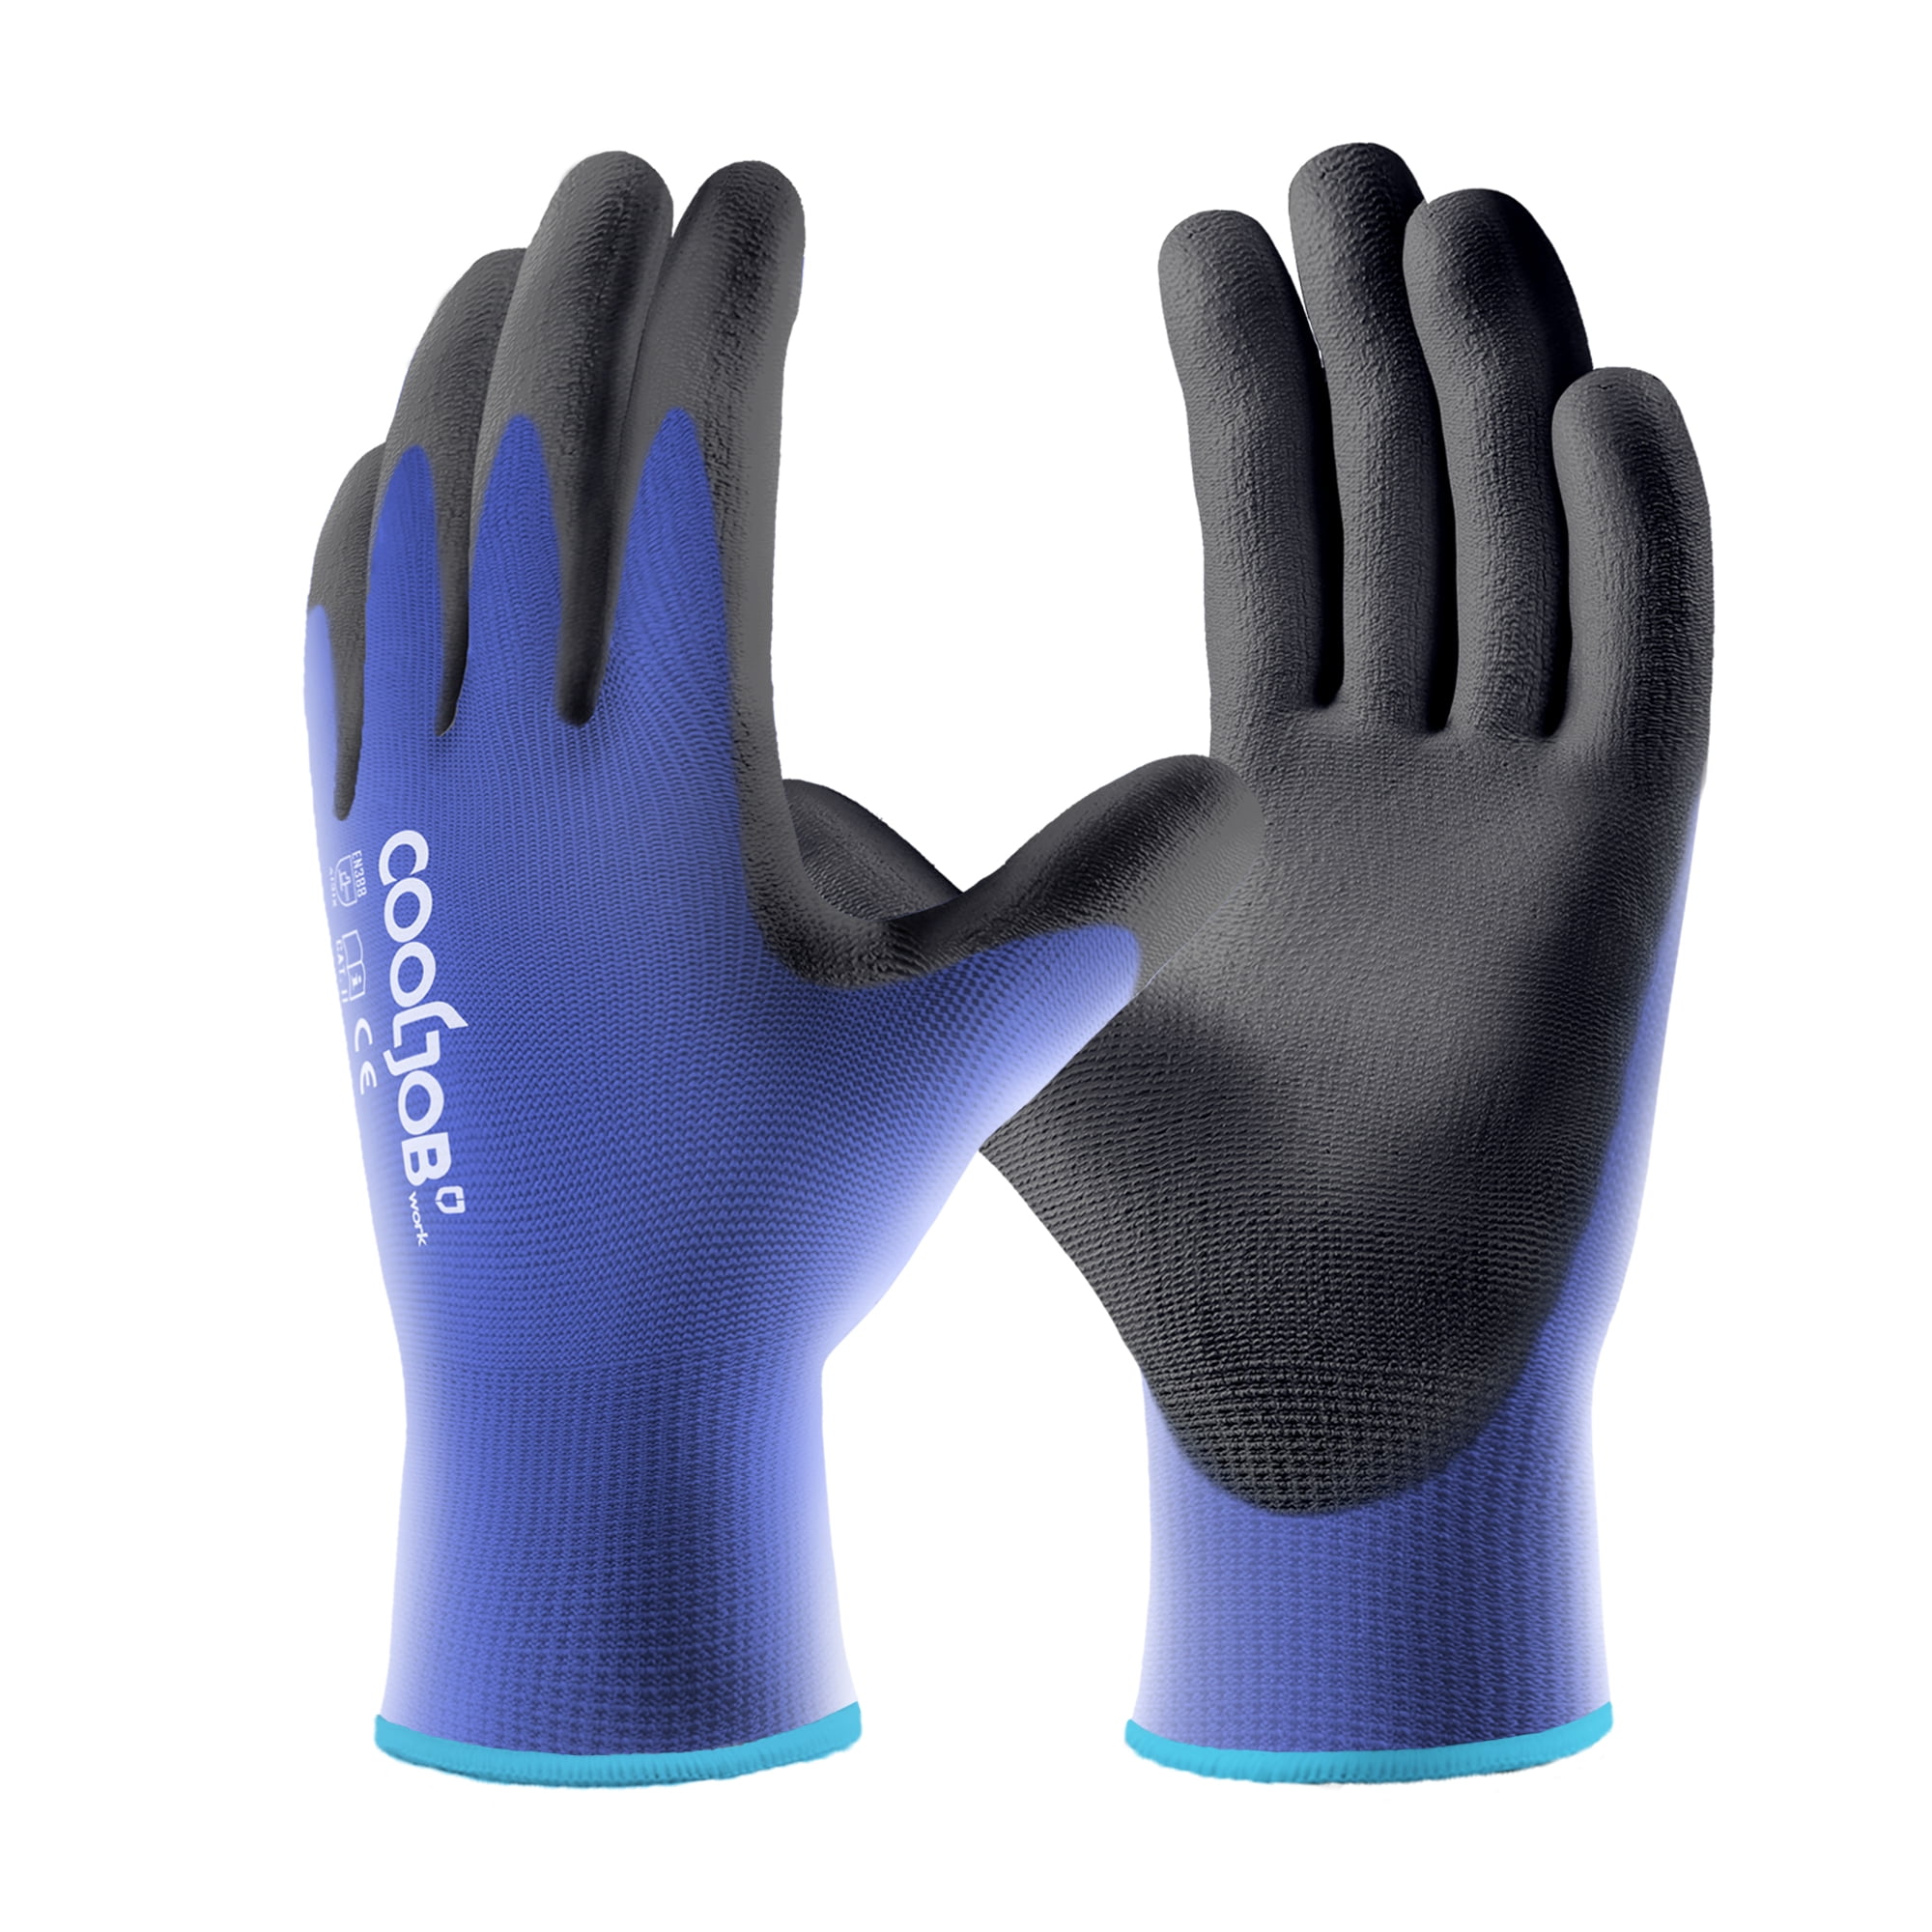 COOLJOB 13 Gauge Safety Work Gloves PU Coated 12 Pairs, Ultra-lite